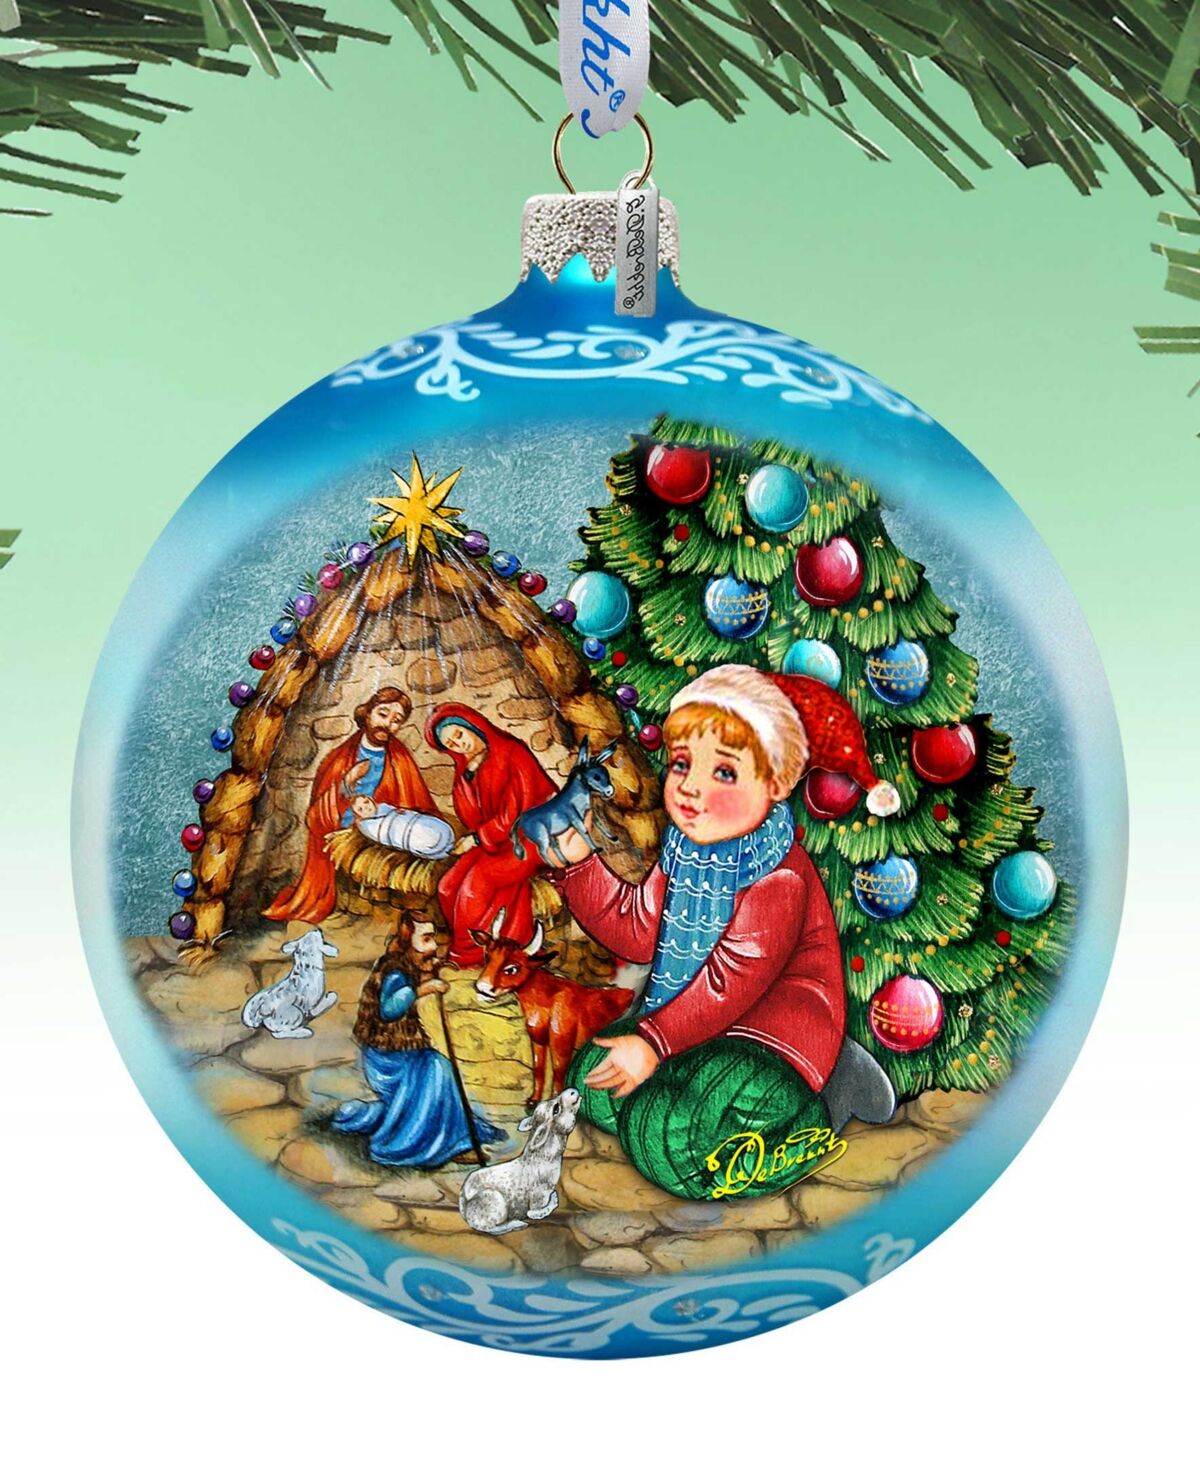 Designocracy Nativity by Christmas Tree Lg Glass Collectible Ornaments G. DeBrekht - Multi Color